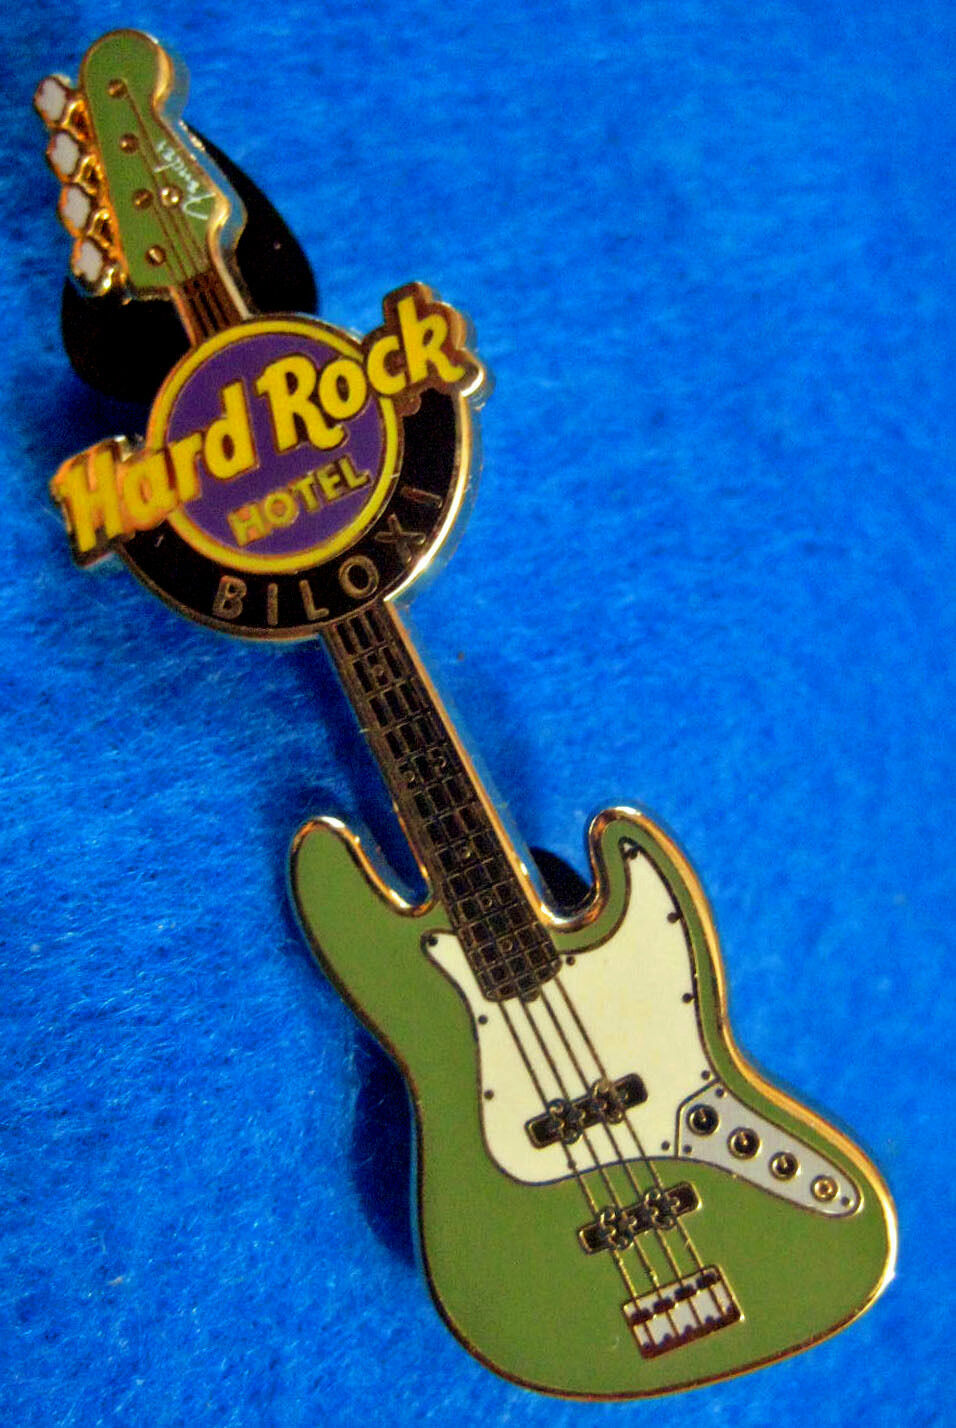 BILOXI HOTEL PEA GREEN JAZZ BASS FENDER GUITAR SERIES 2011 Hard Rock Cafe PIN LE